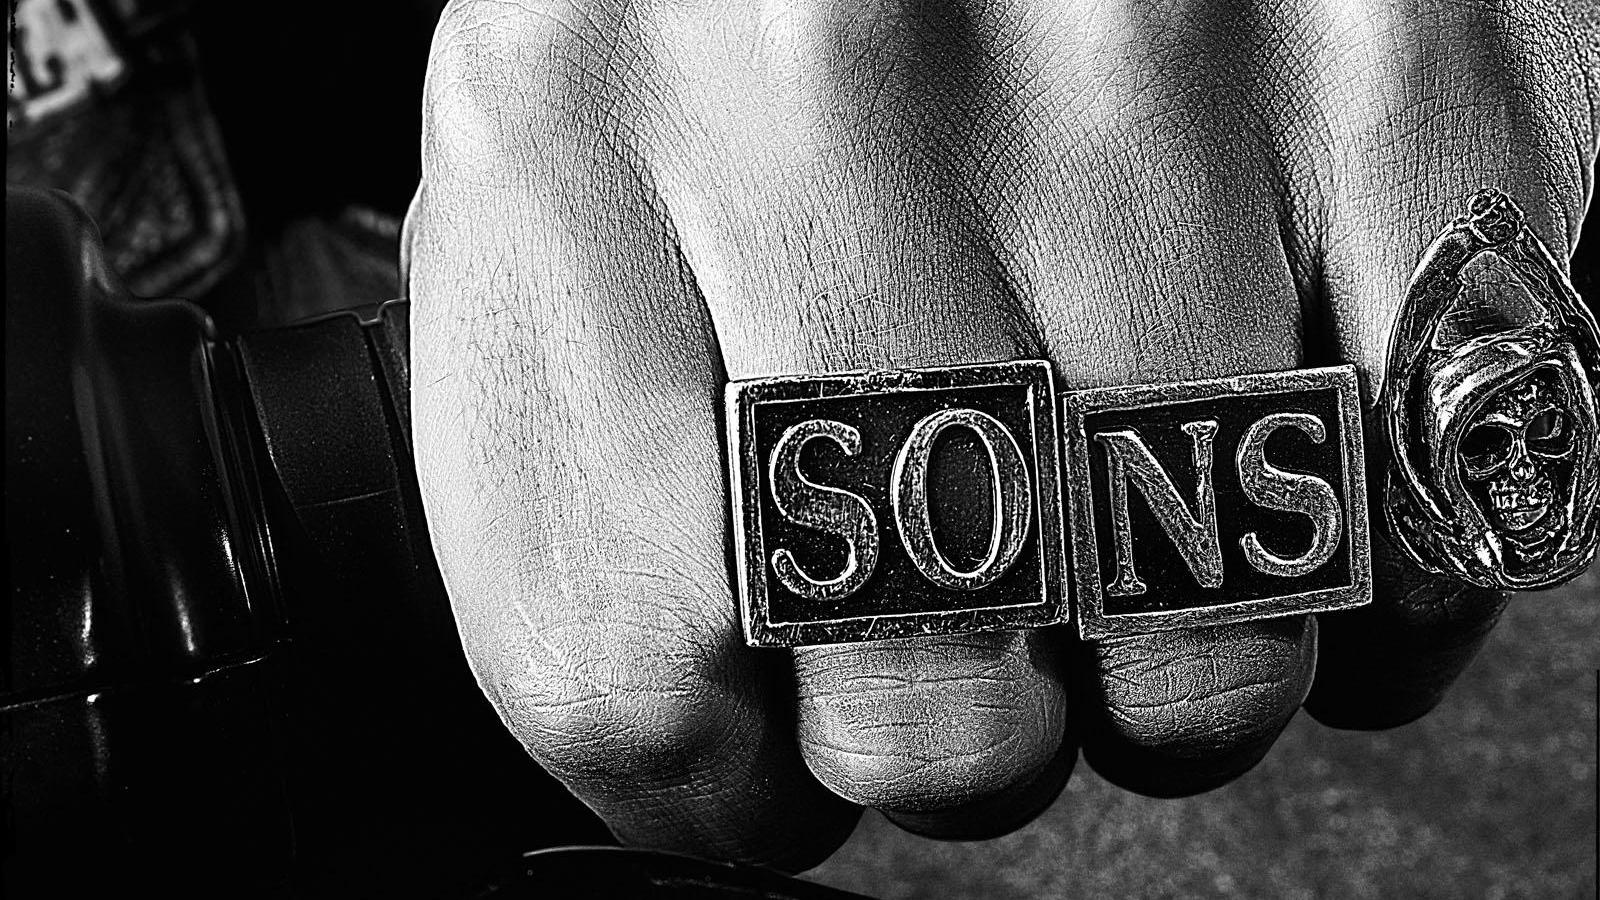 Sons of Anarchy Season 7 Trailer